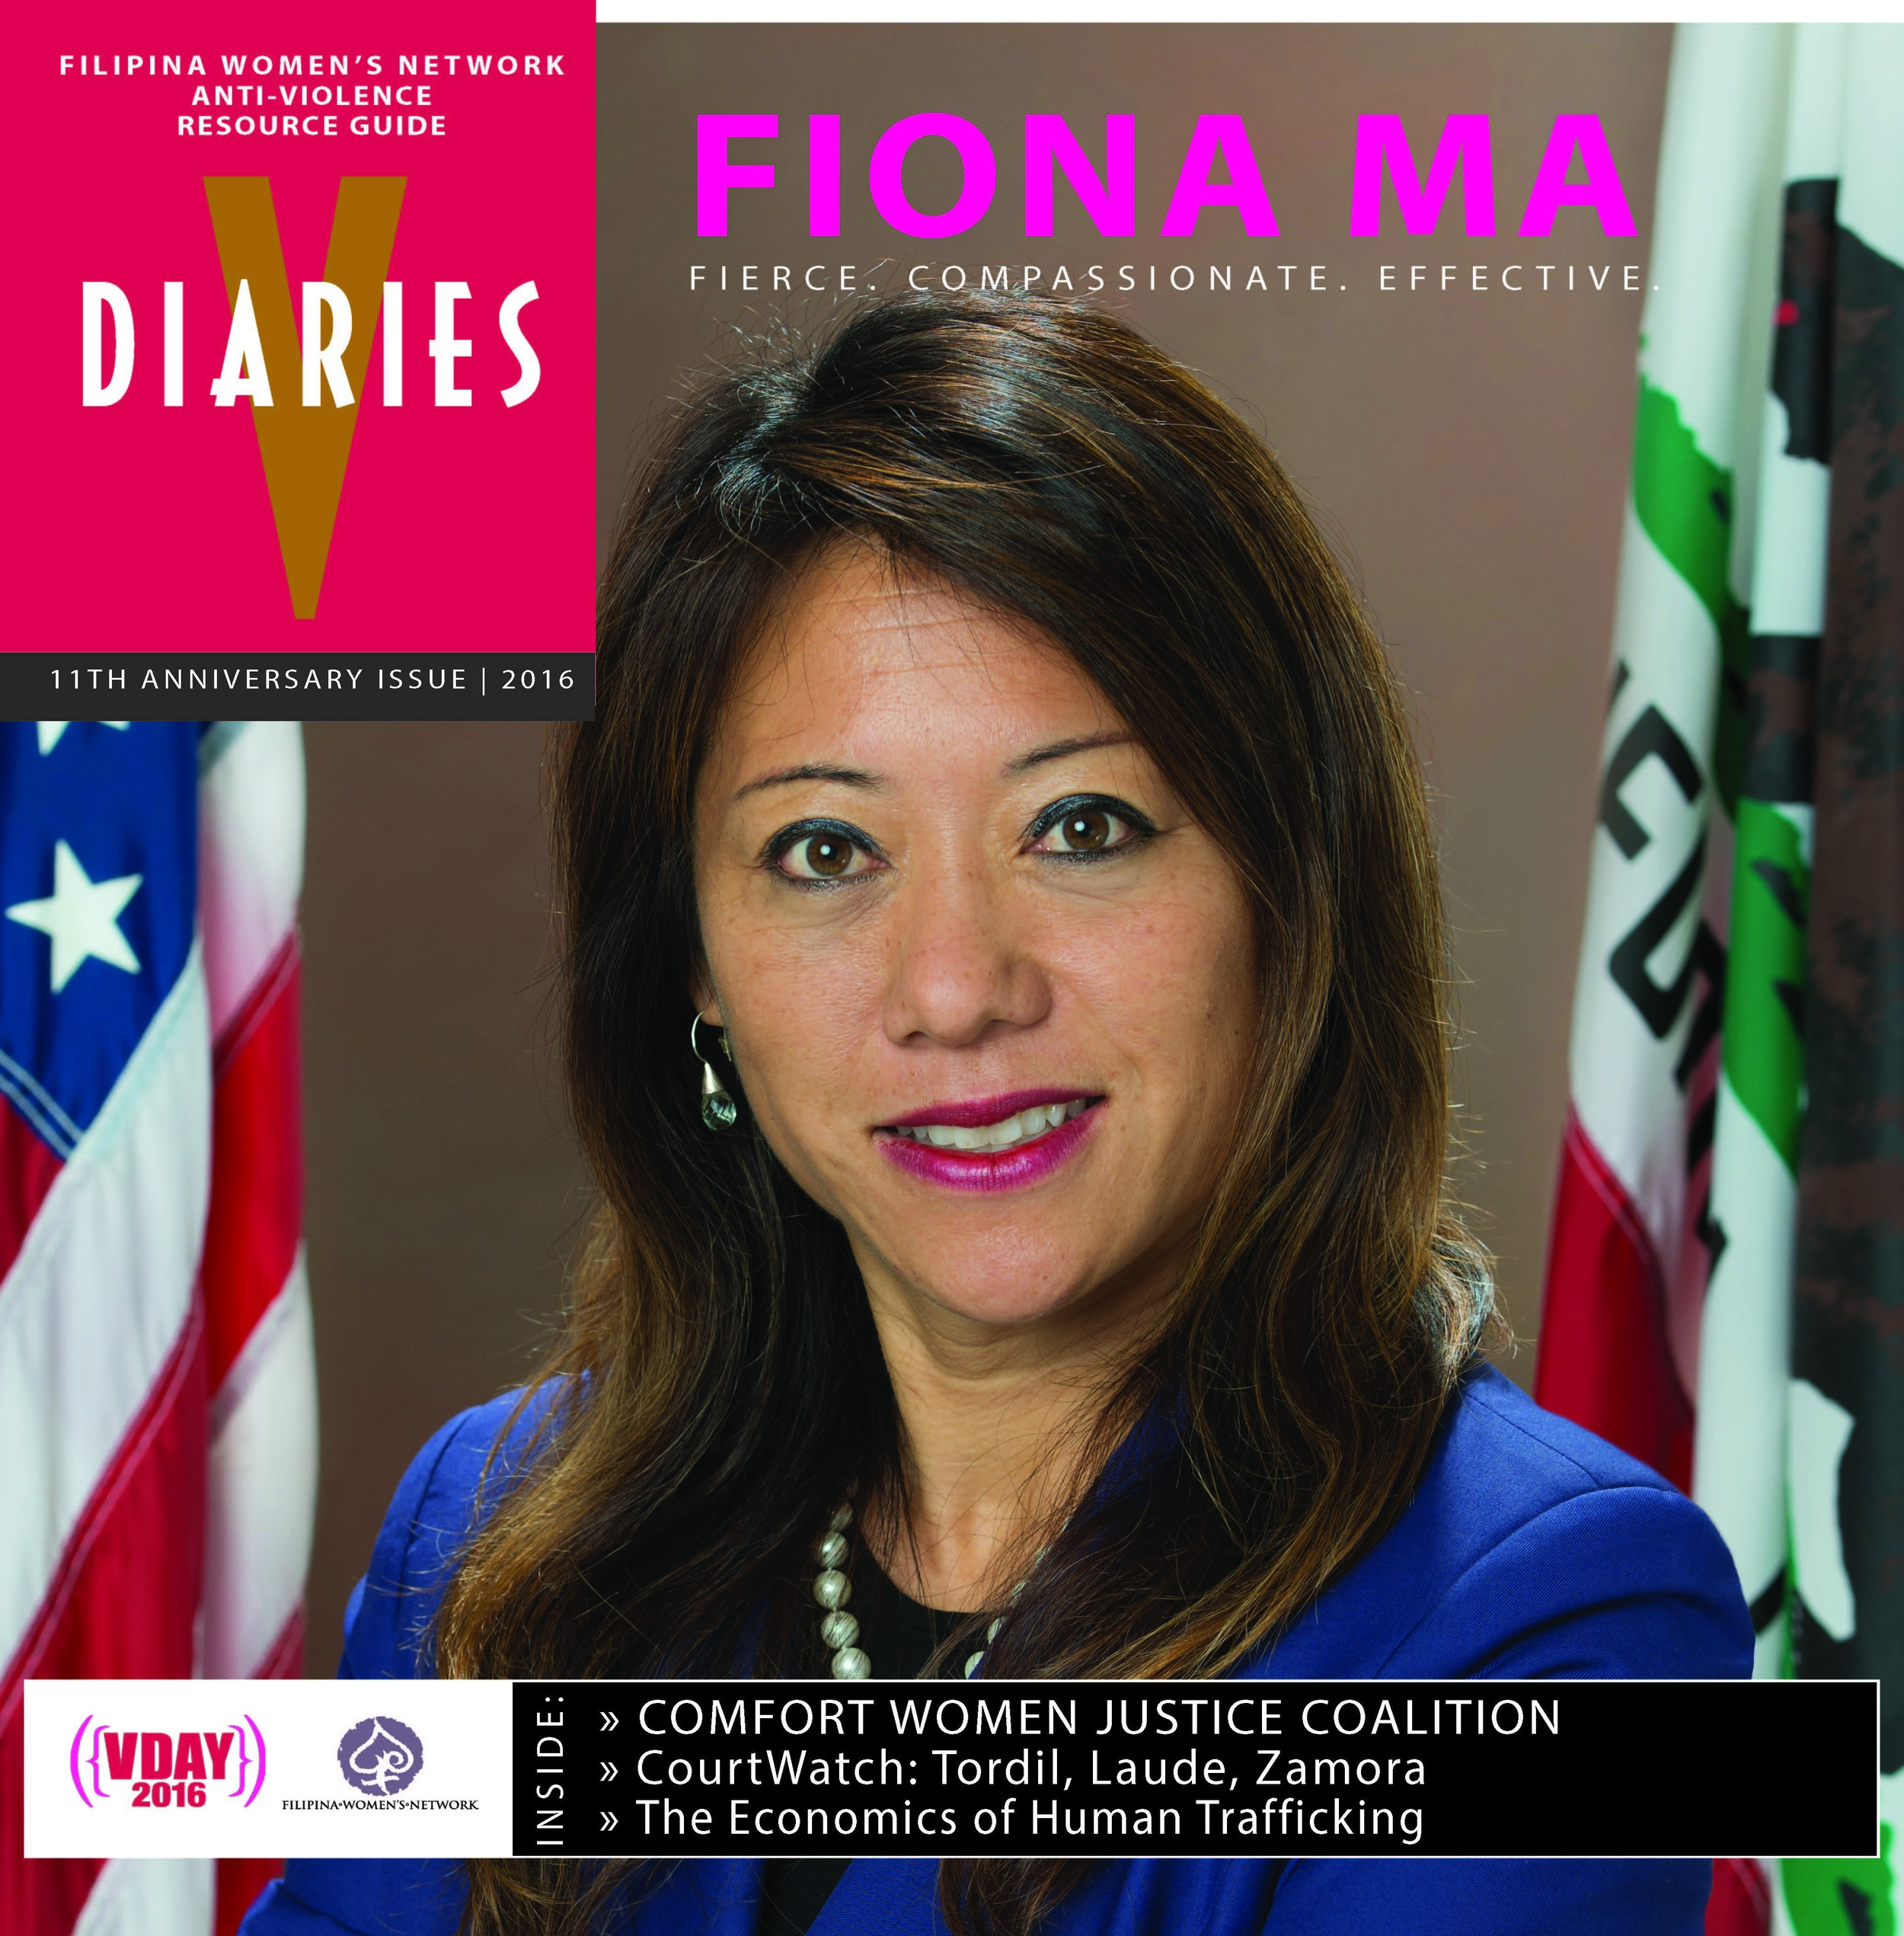 V-Diaries 2016 - Fiona Ma